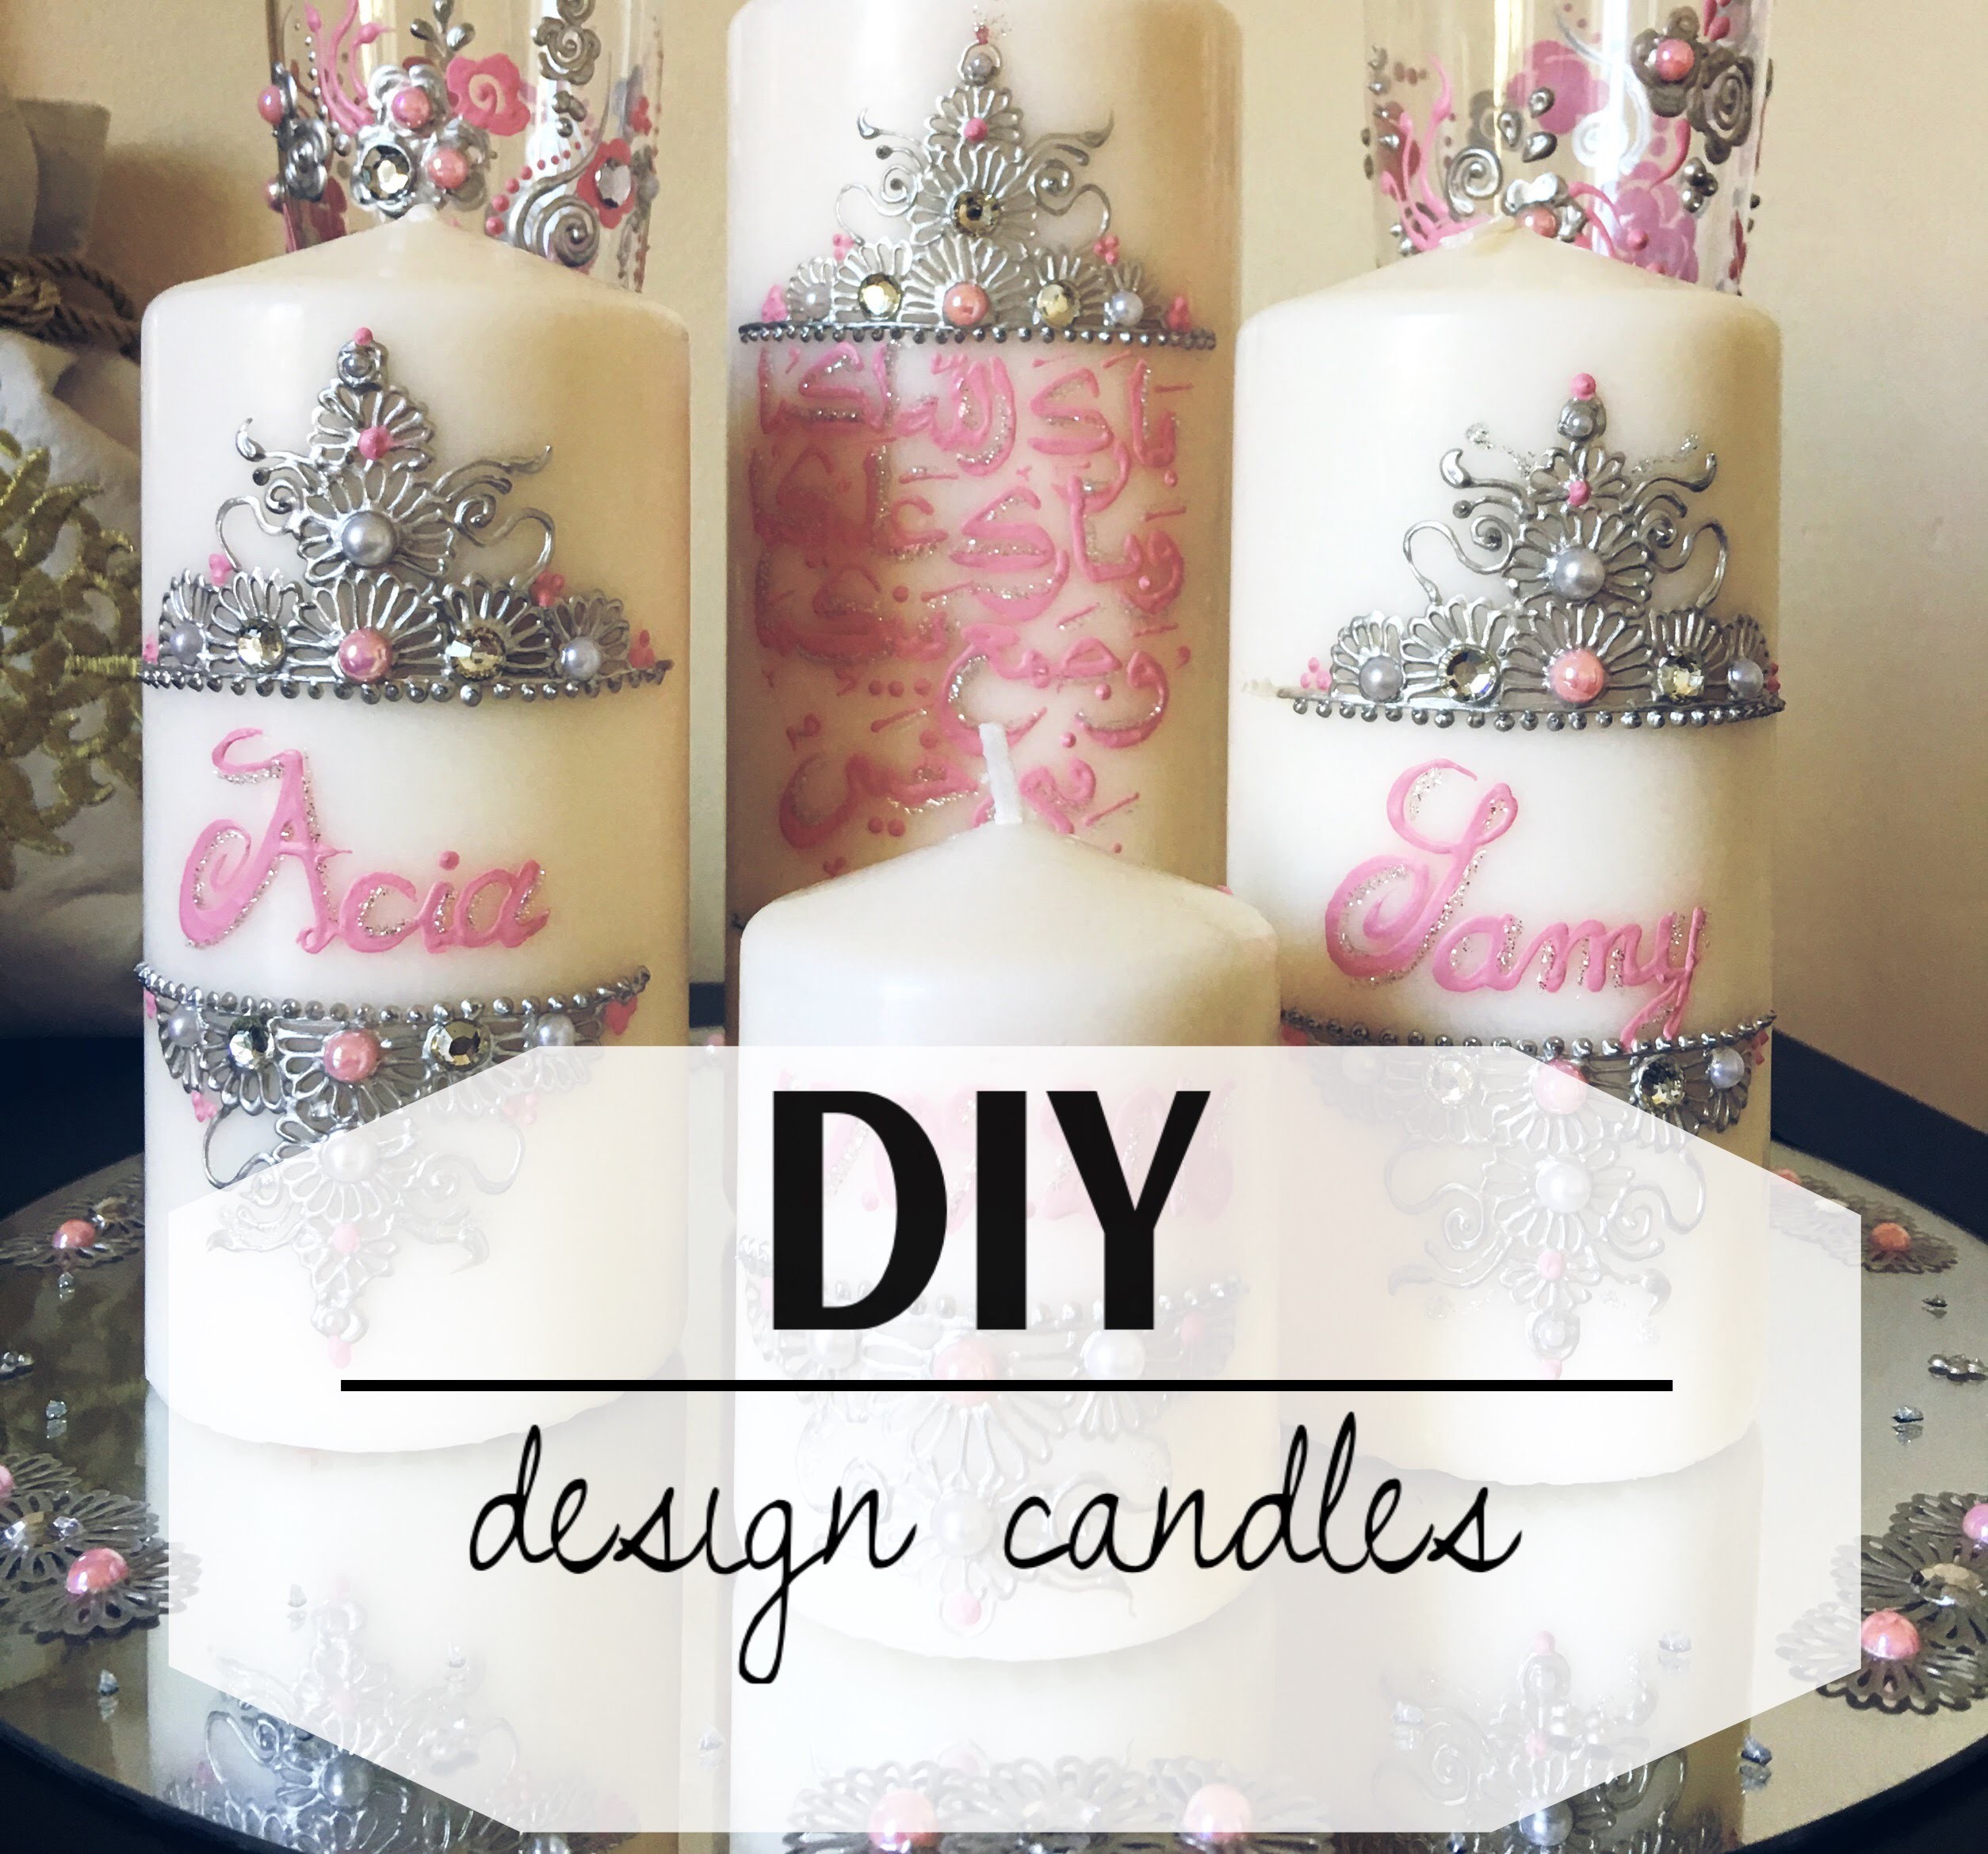 DIY design candles tutorial